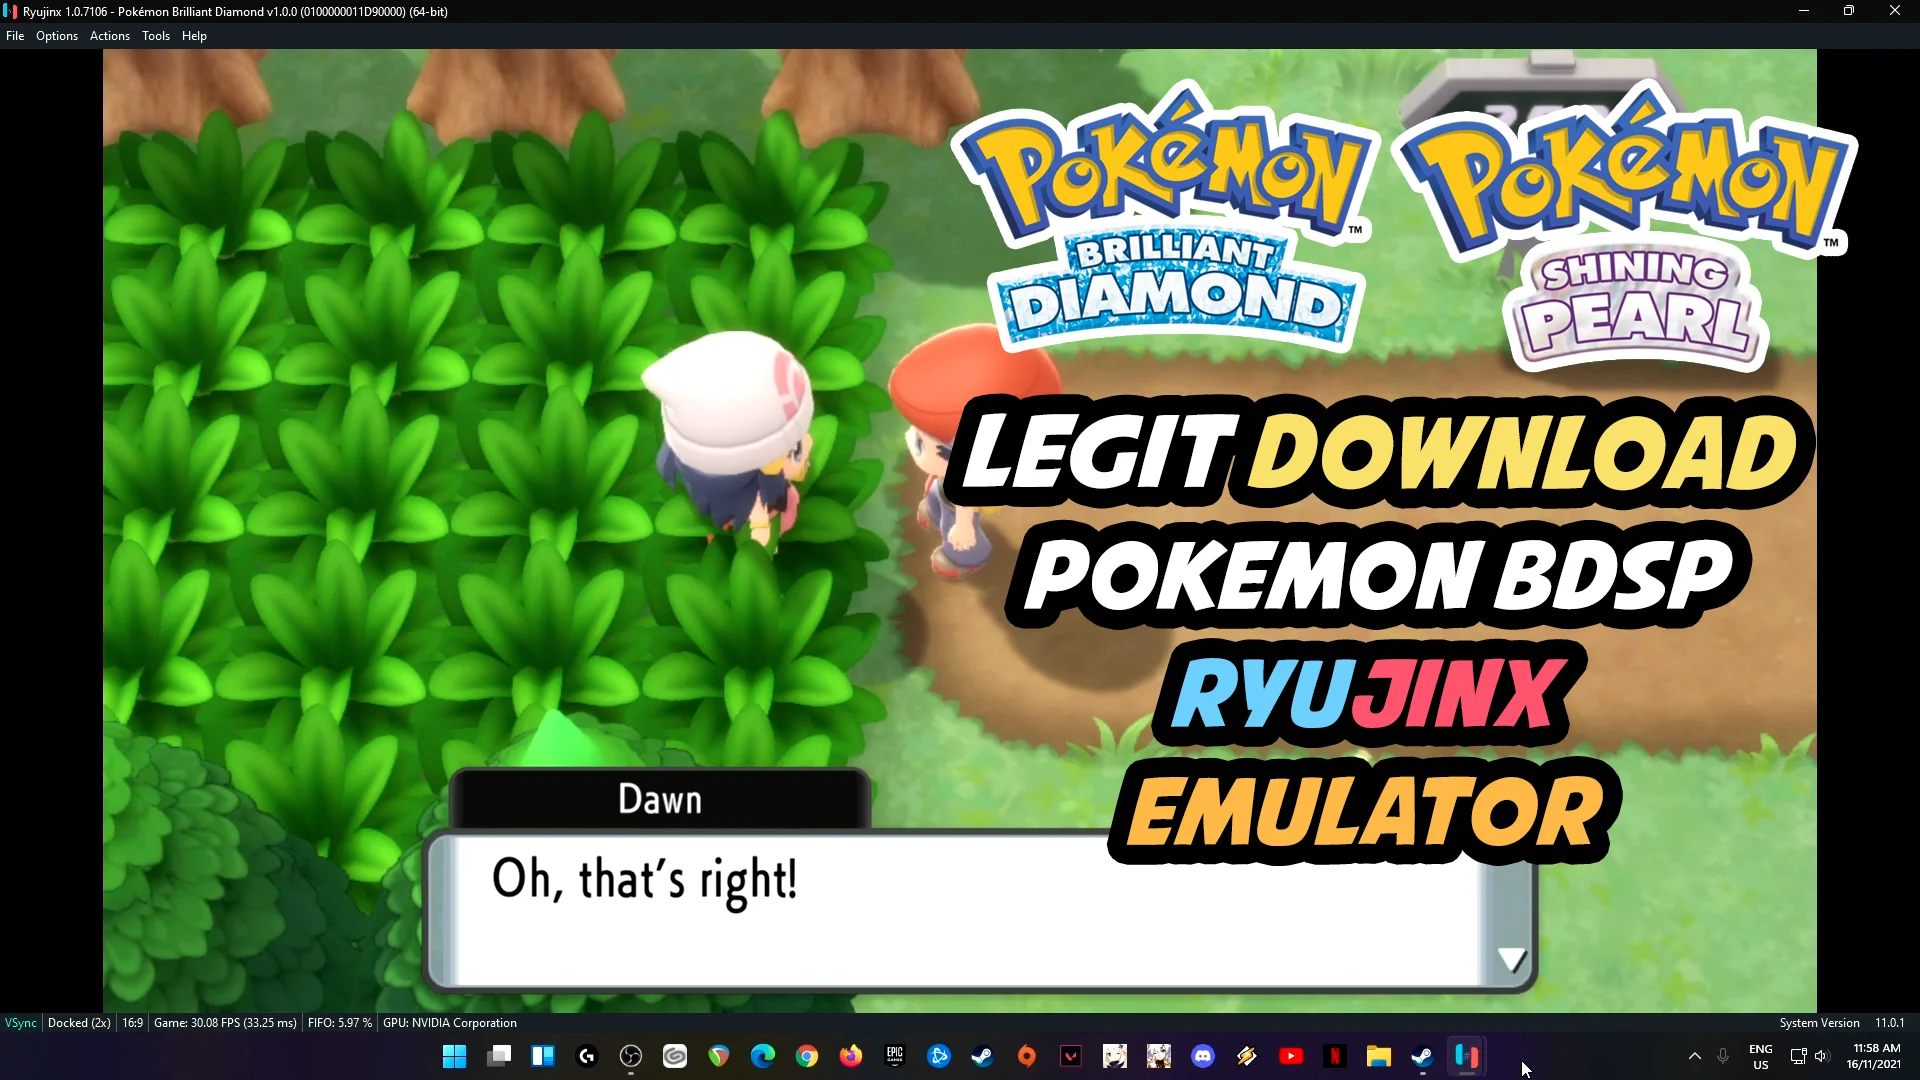 How To Install Pokémon Brilliant Diamond & Shining Pearl on PC [Ryujinx] on  Vimeo